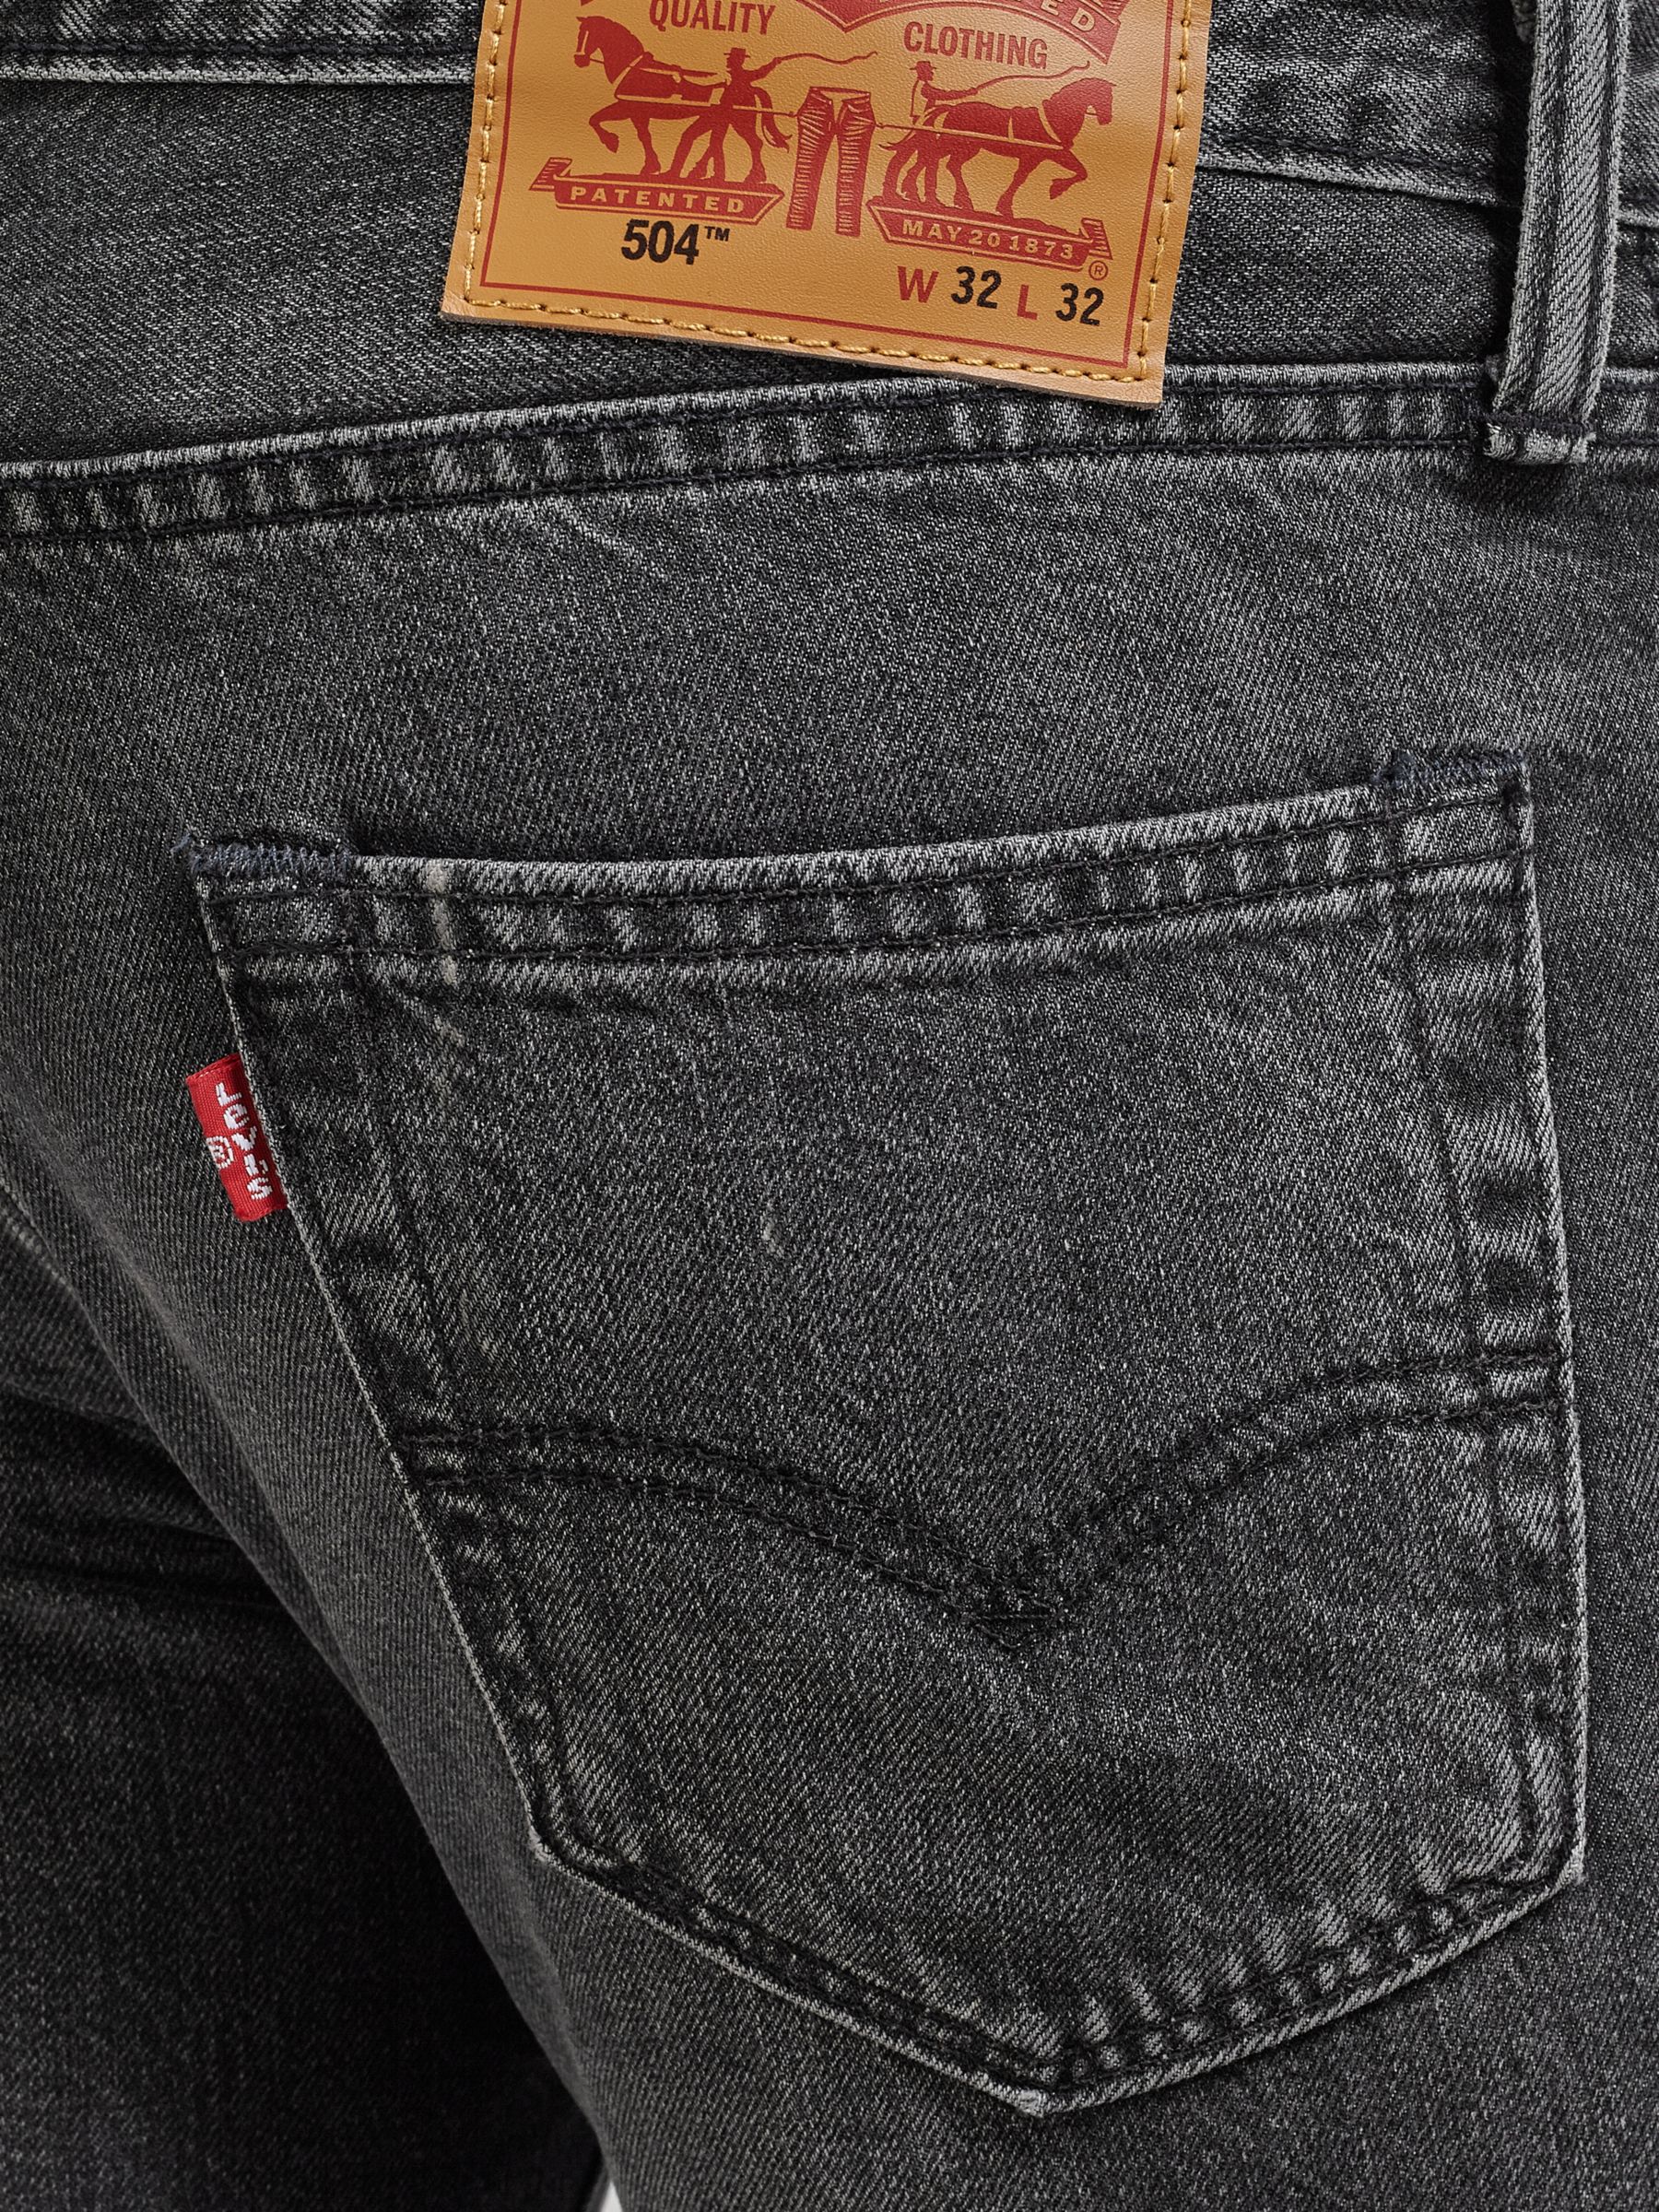 levi's jeans 504 regular straight fit